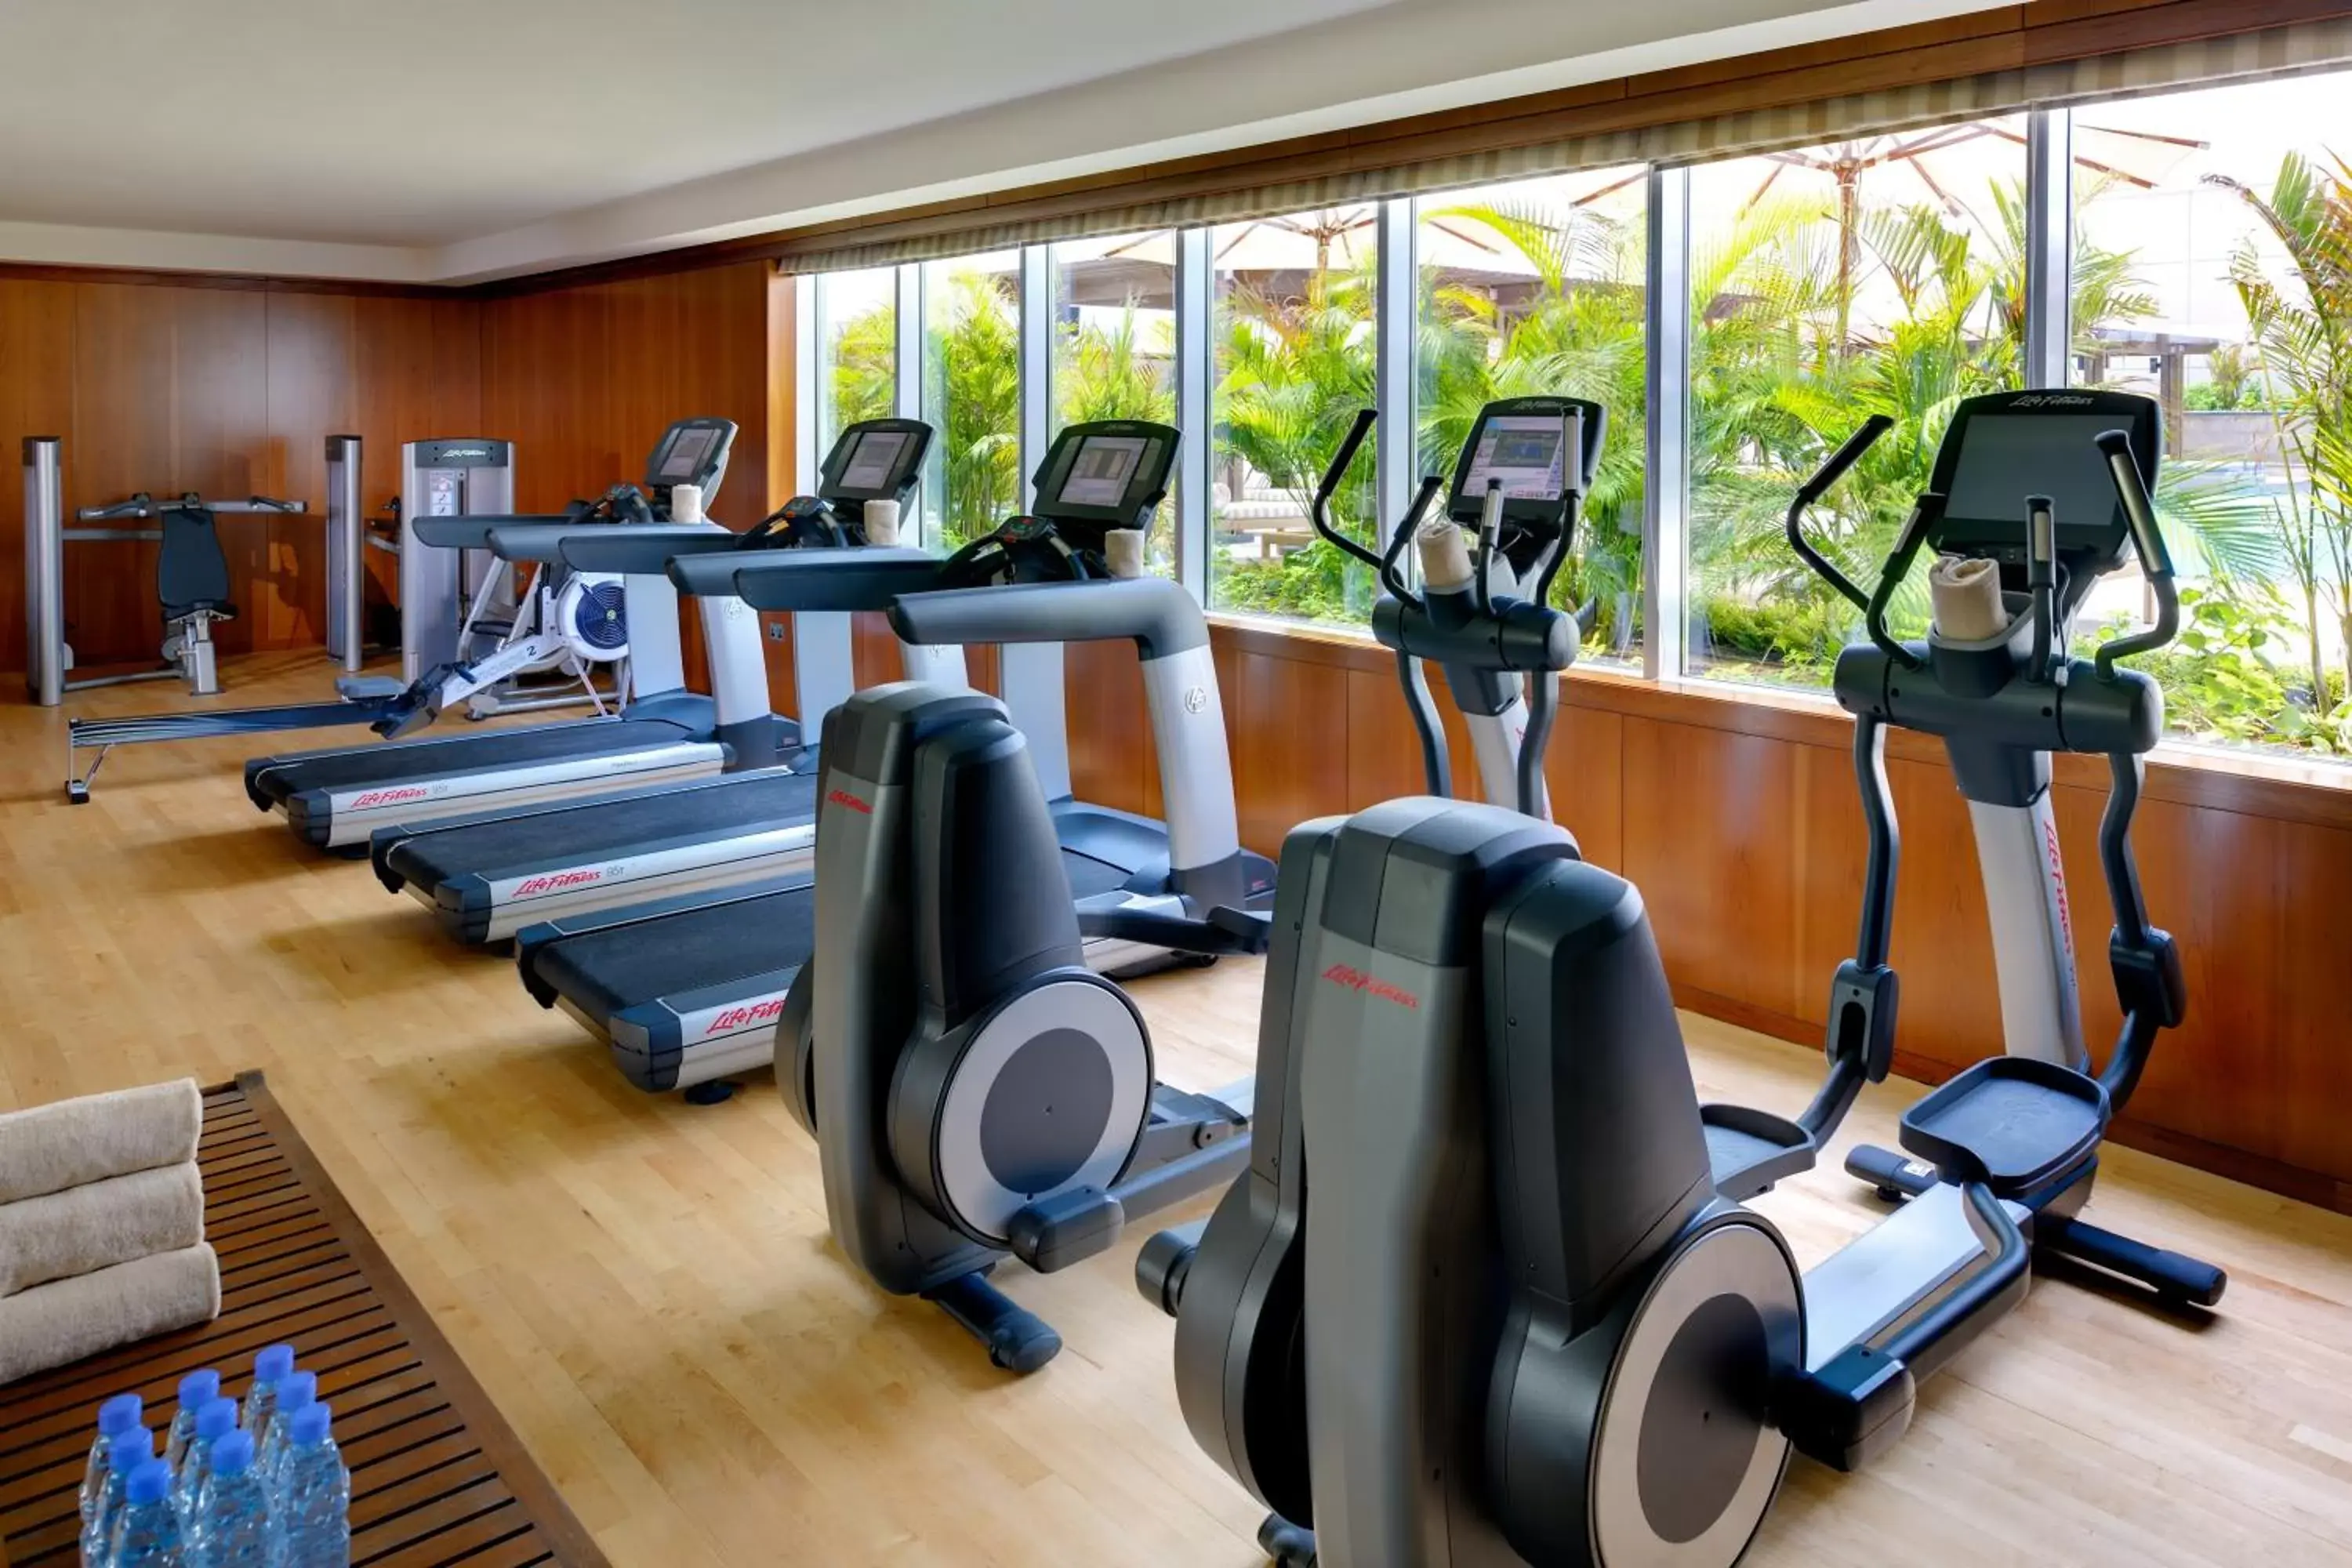 Fitness centre/facilities, Fitness Center/Facilities in Crowne Plaza - Dubai Jumeirah, an IHG Hotel